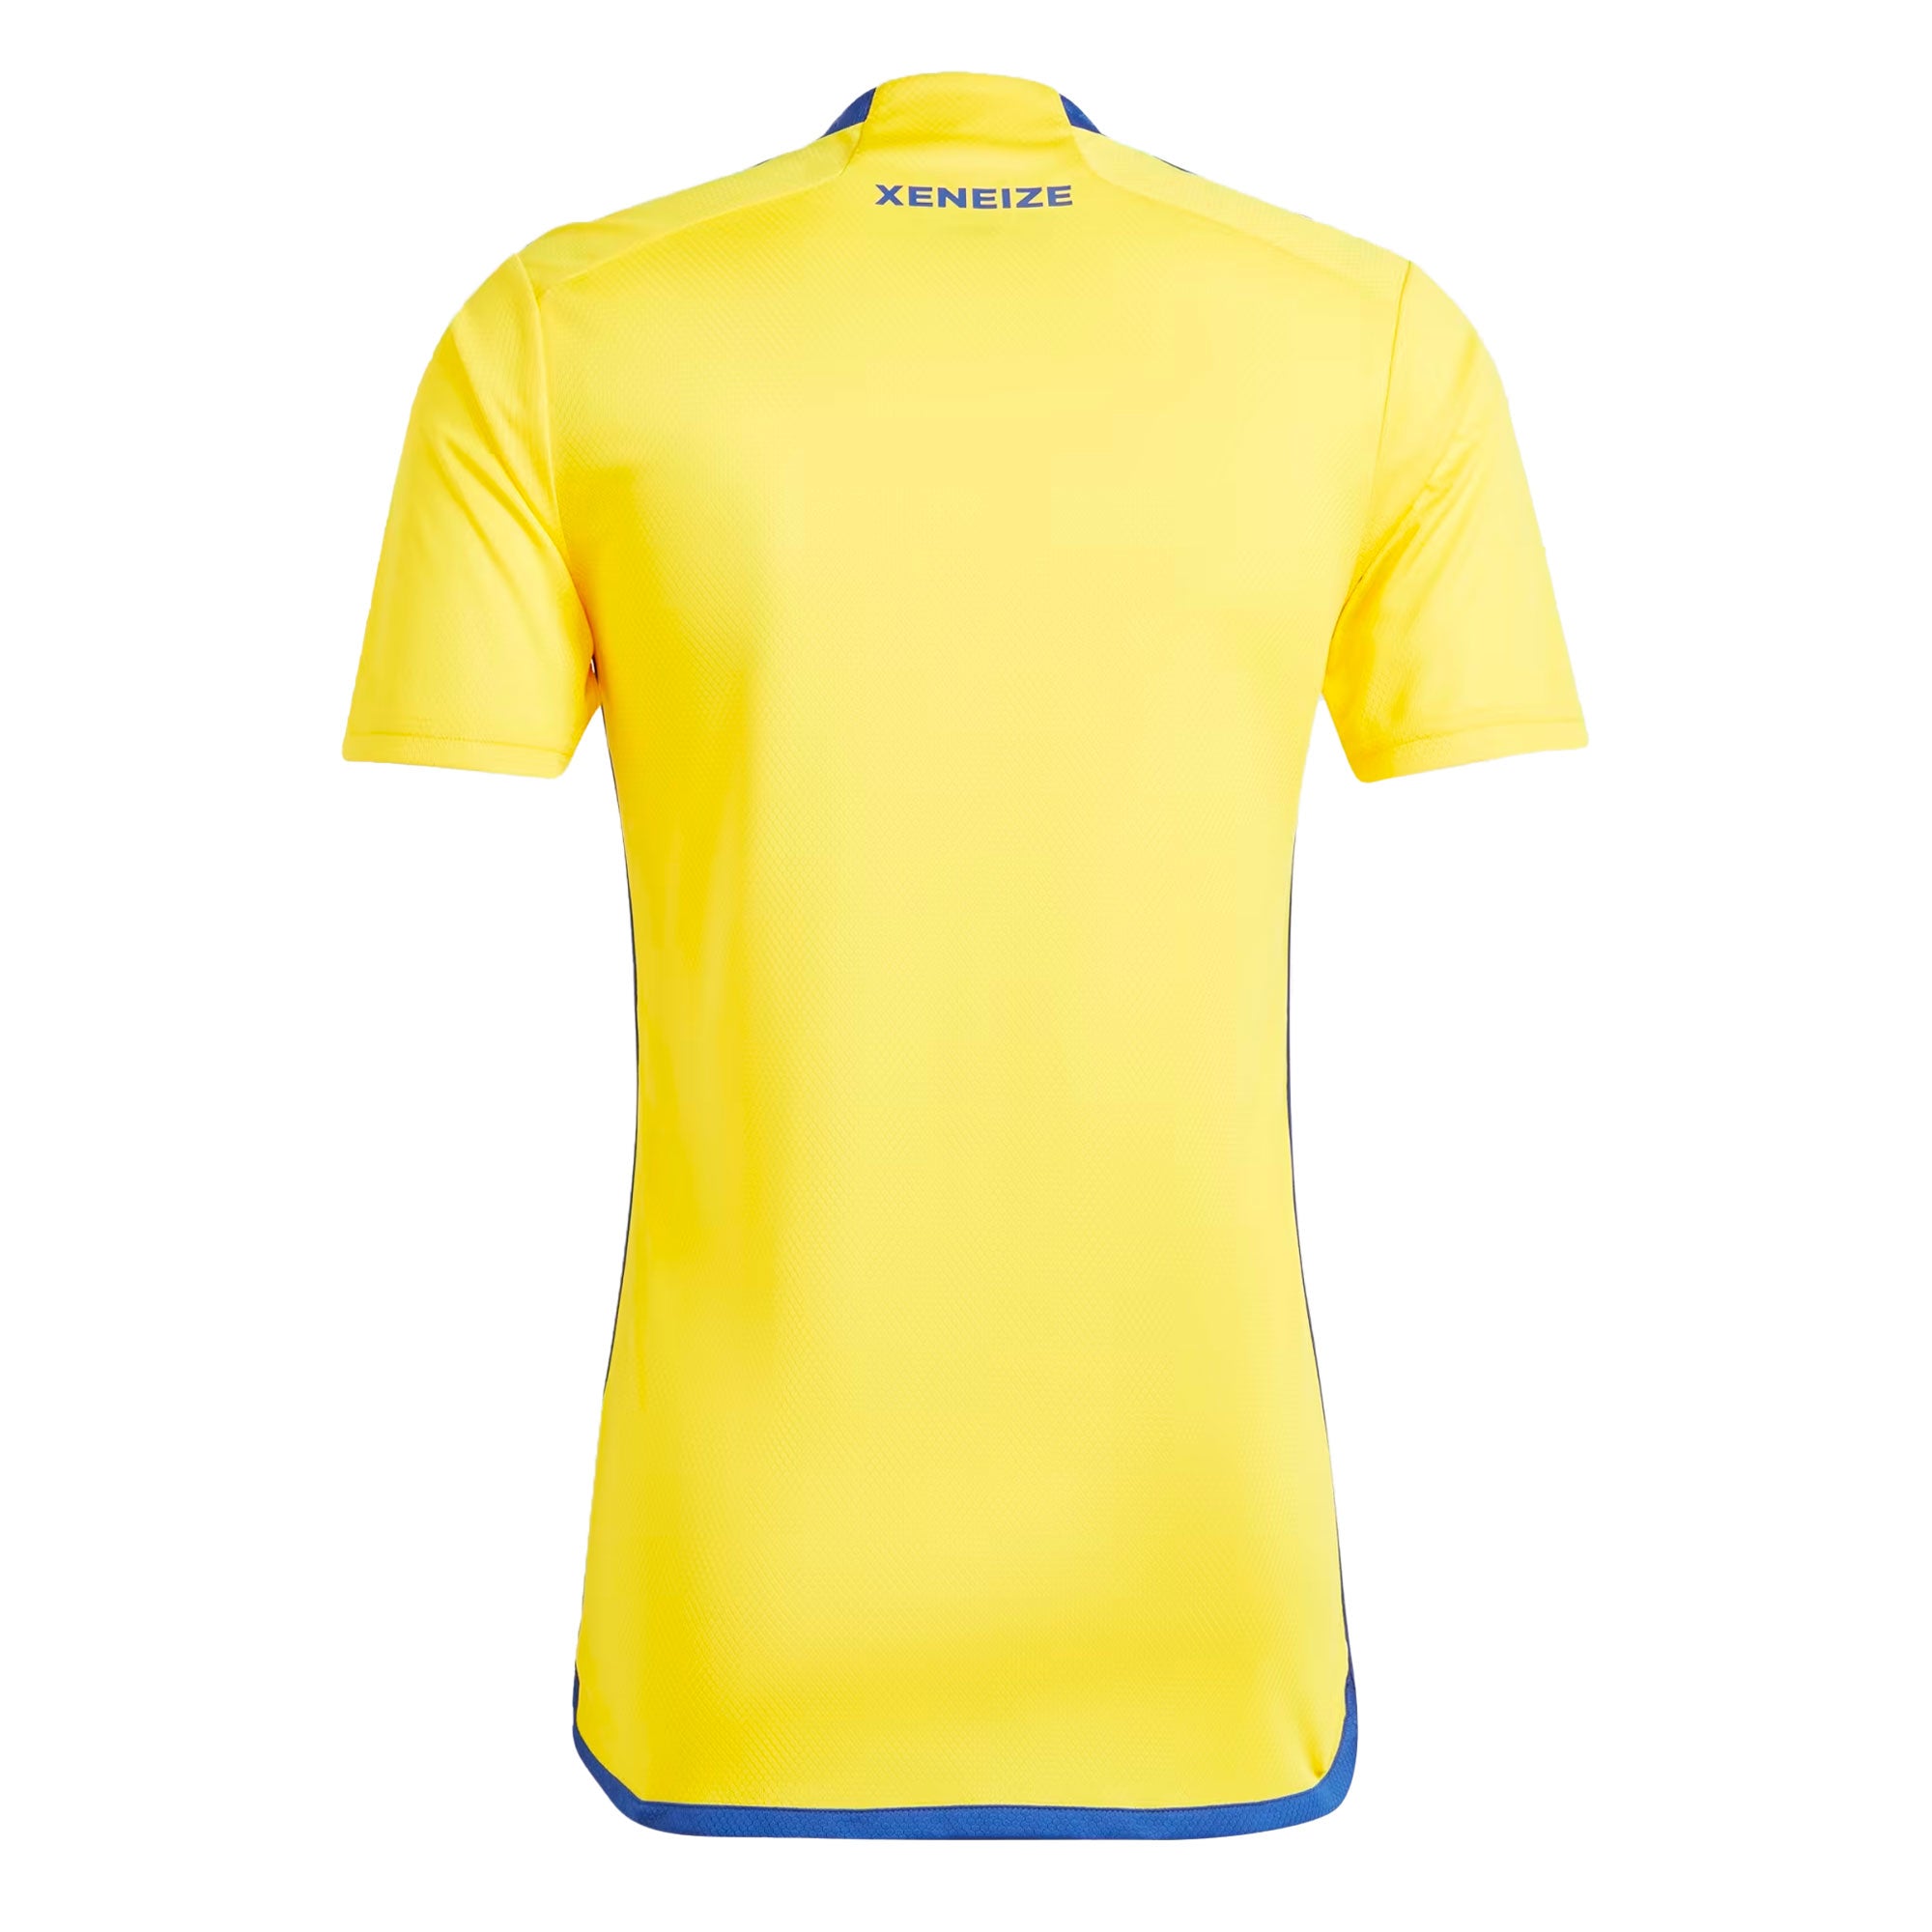 Boca Juniors Reveal & Debut 2023/24 Away Shirt From adidas